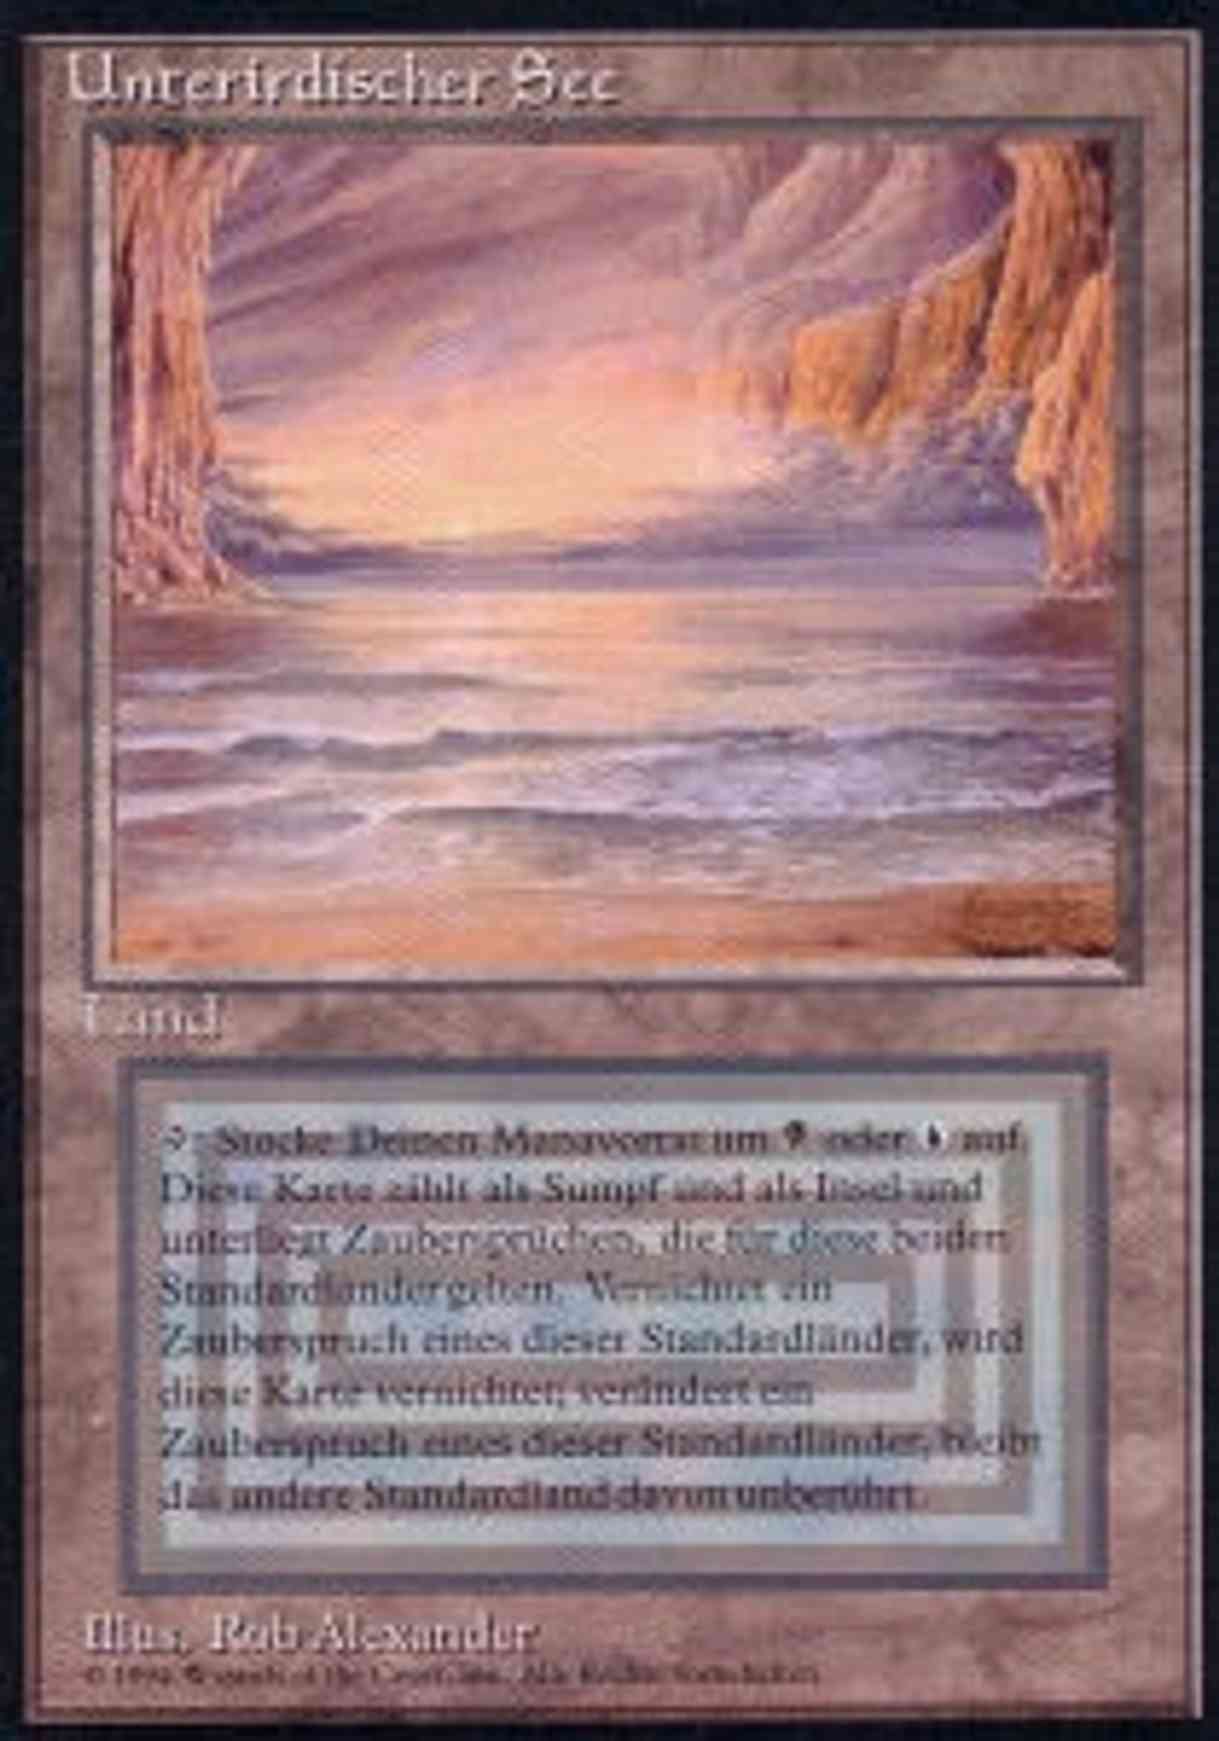 Underground Sea magic card front